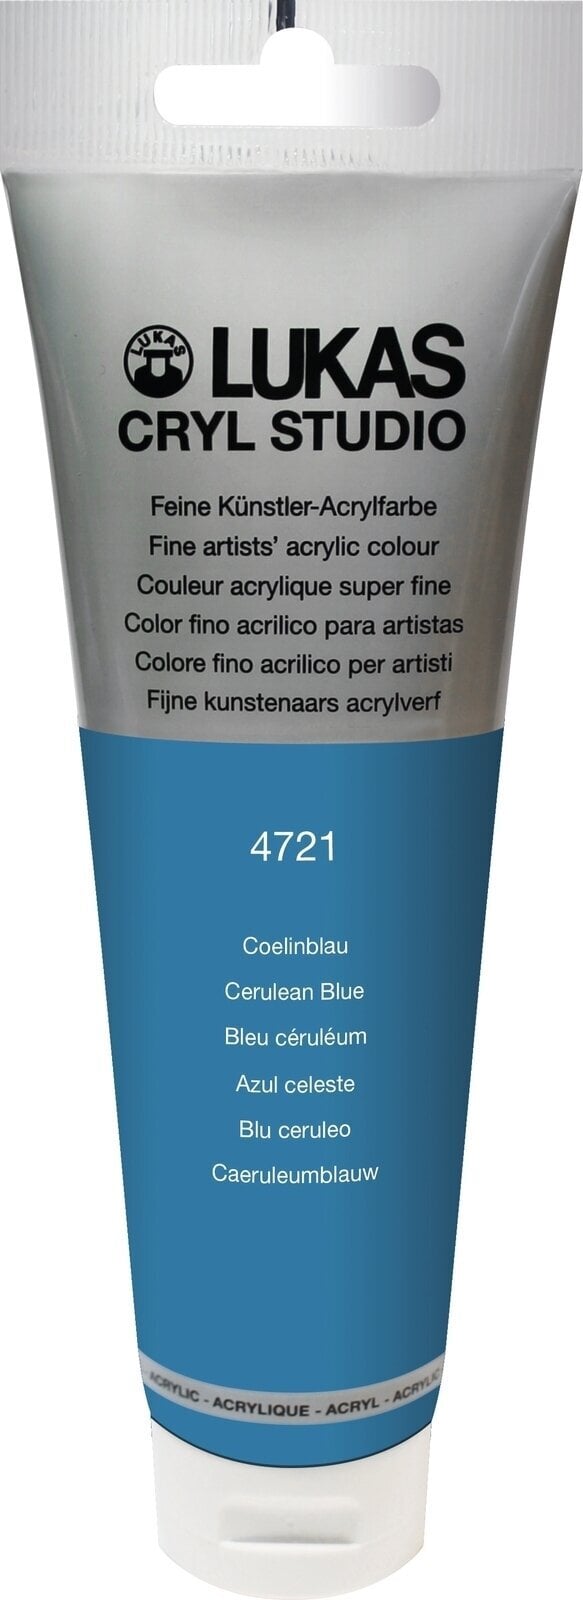 Akrylová farba Lukas Cryl Studio Acrylic Paint Plastic Tube Akrylová farba Cerulean Blue 125 ml 1 ks